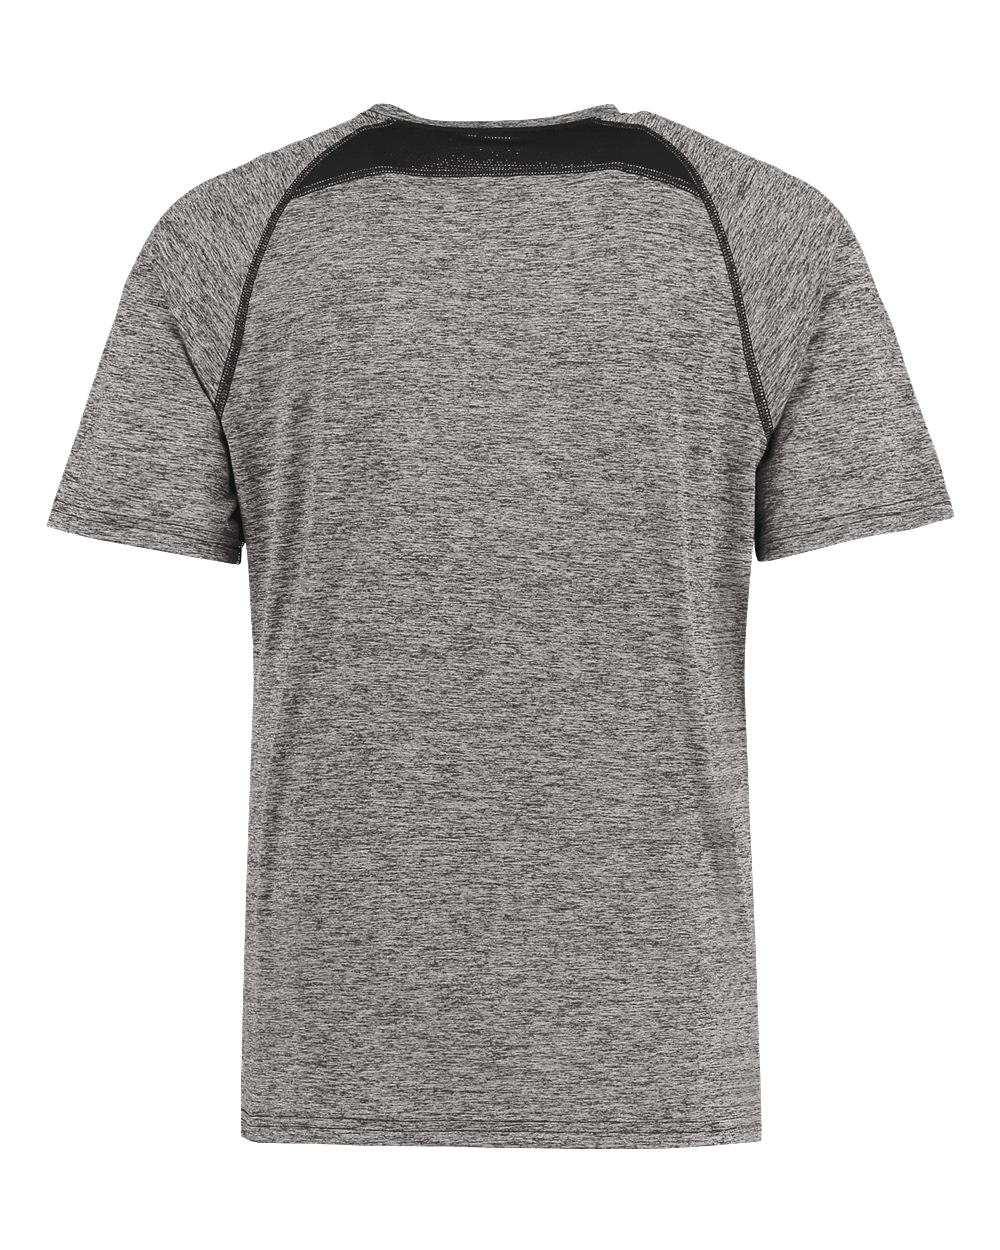 OCEAN SUNSET Poly/Elastane High Performance T-Shirt with UPF 50+